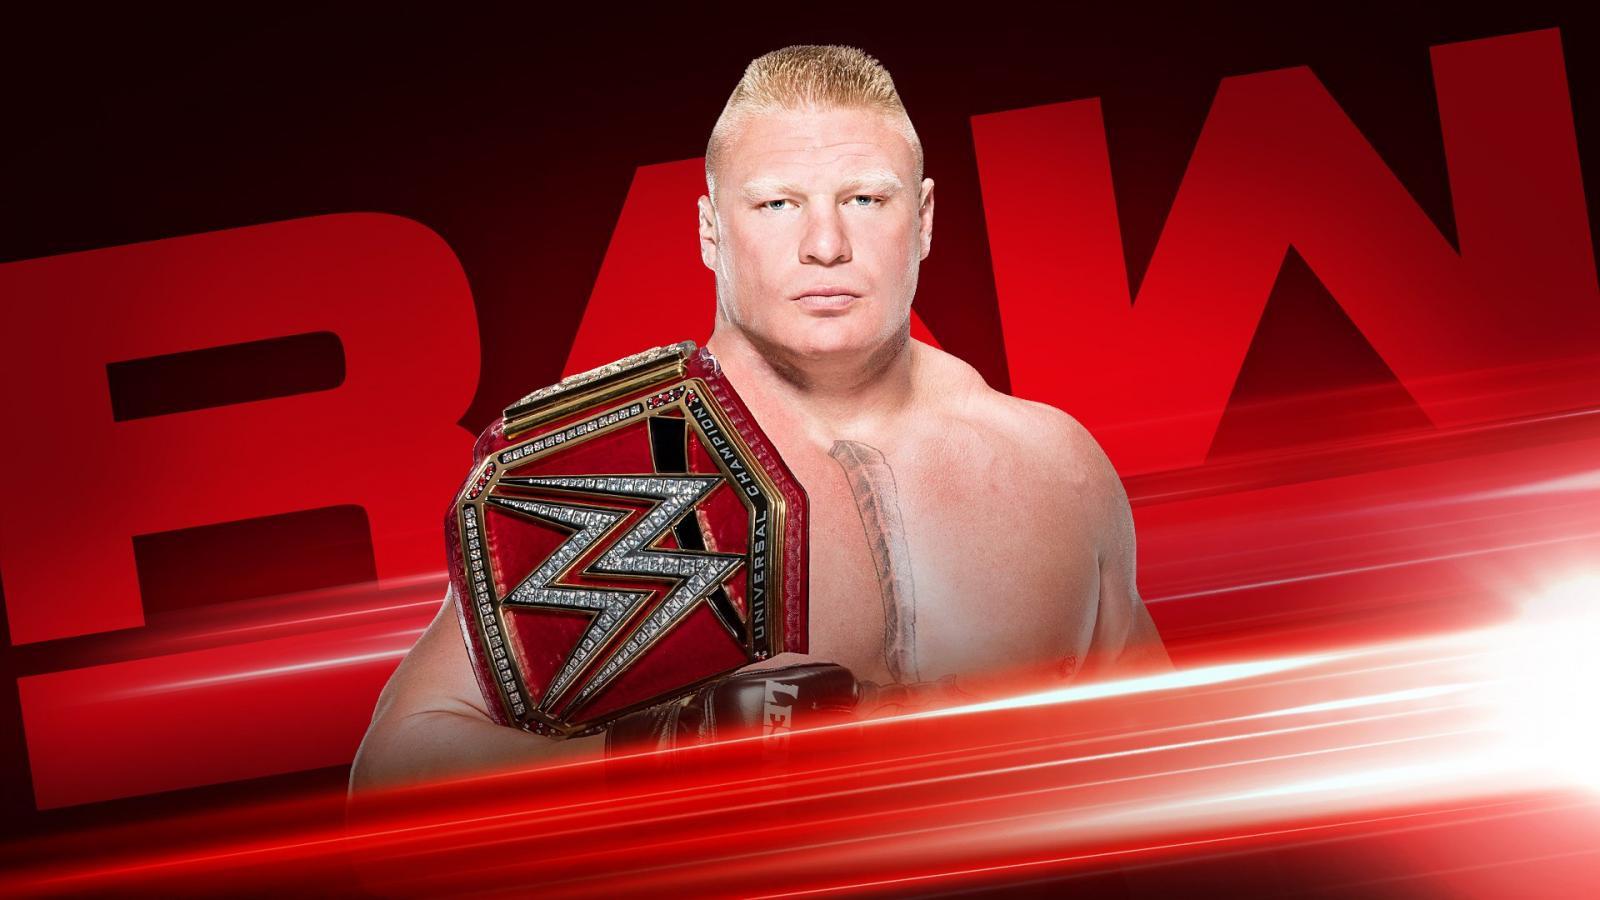 WWE Raw invades Joe Louis Arena again